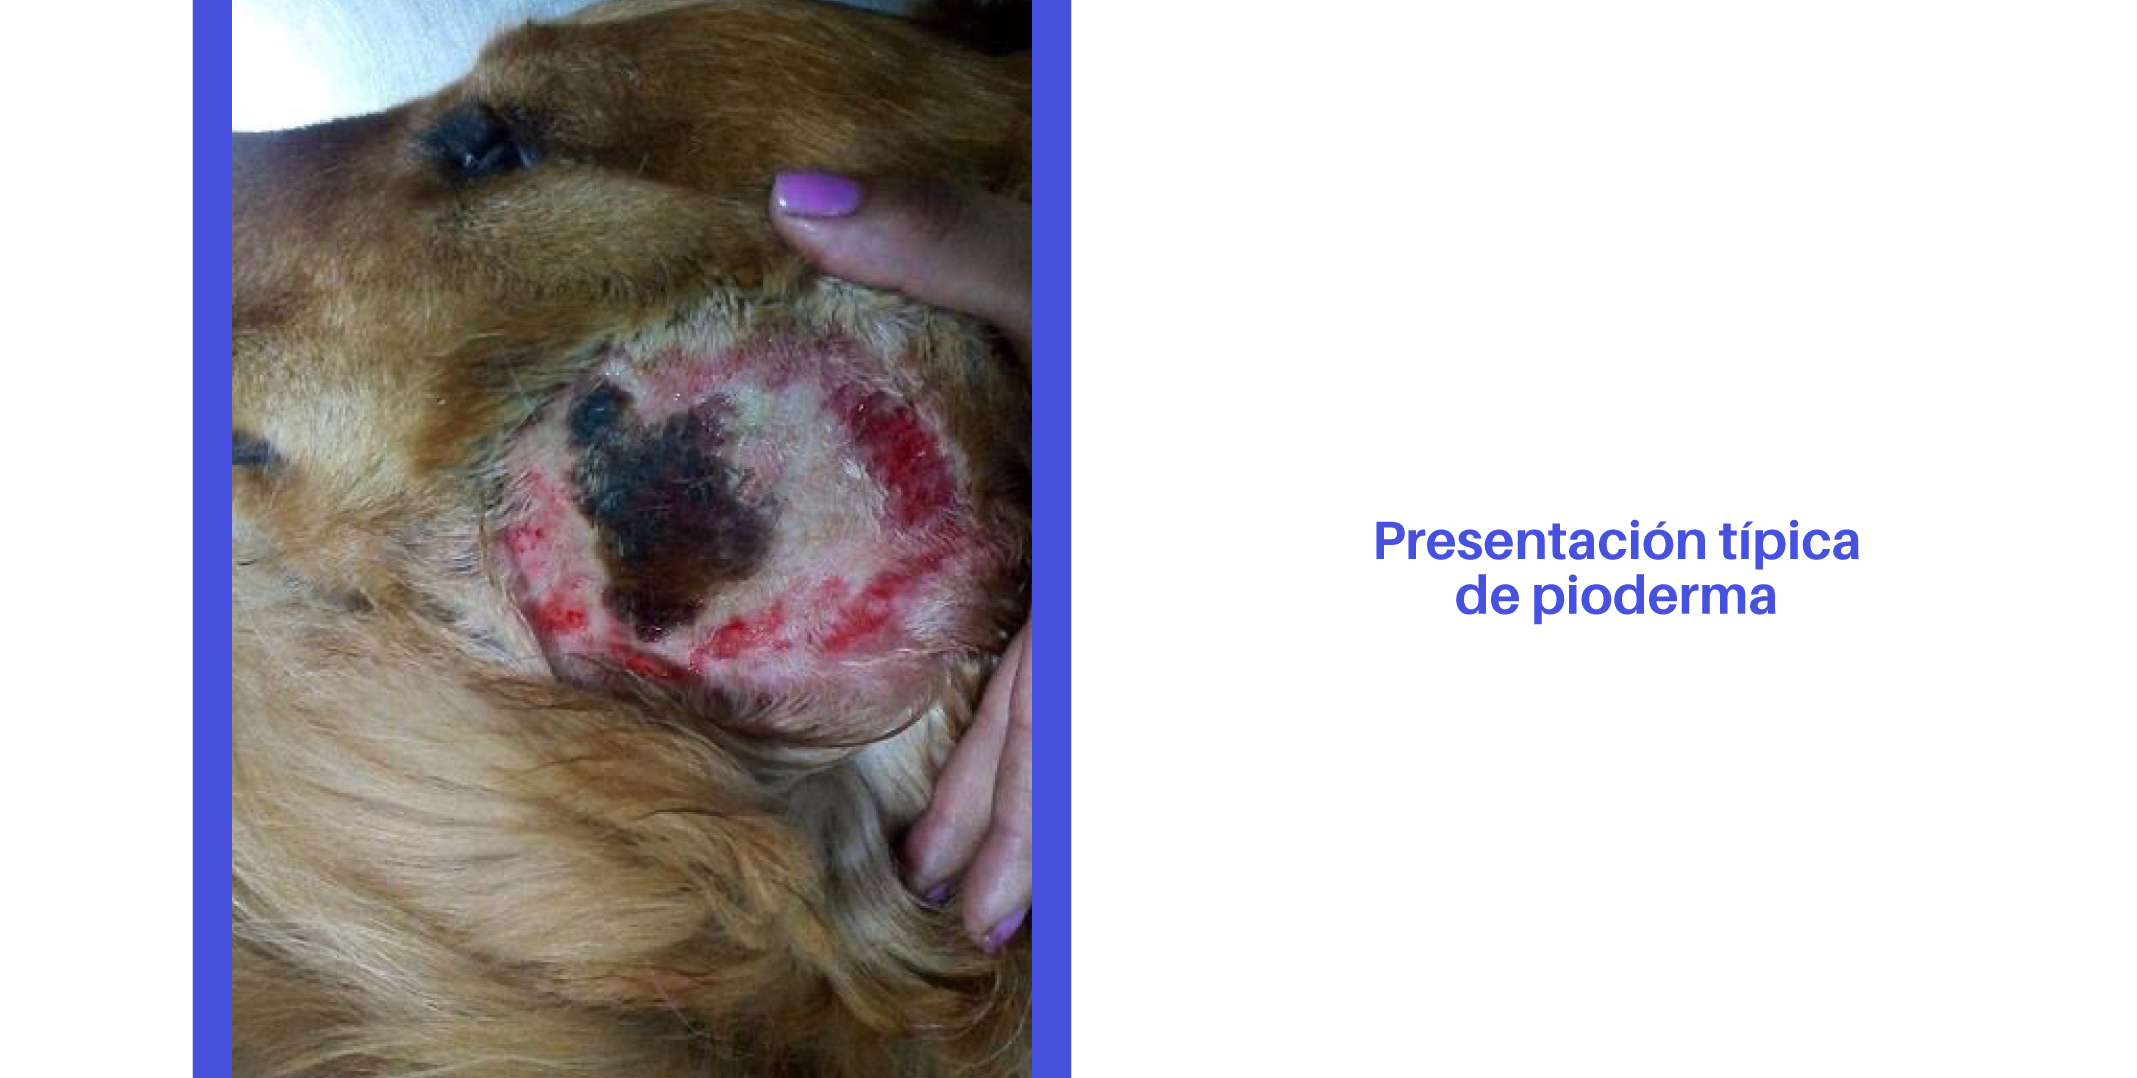 Bio Zoo Tomada de https://www.clinicaraza.com/blog/dali-el-estres-pudo-cusarte-esa-lesion-pioderma-canina